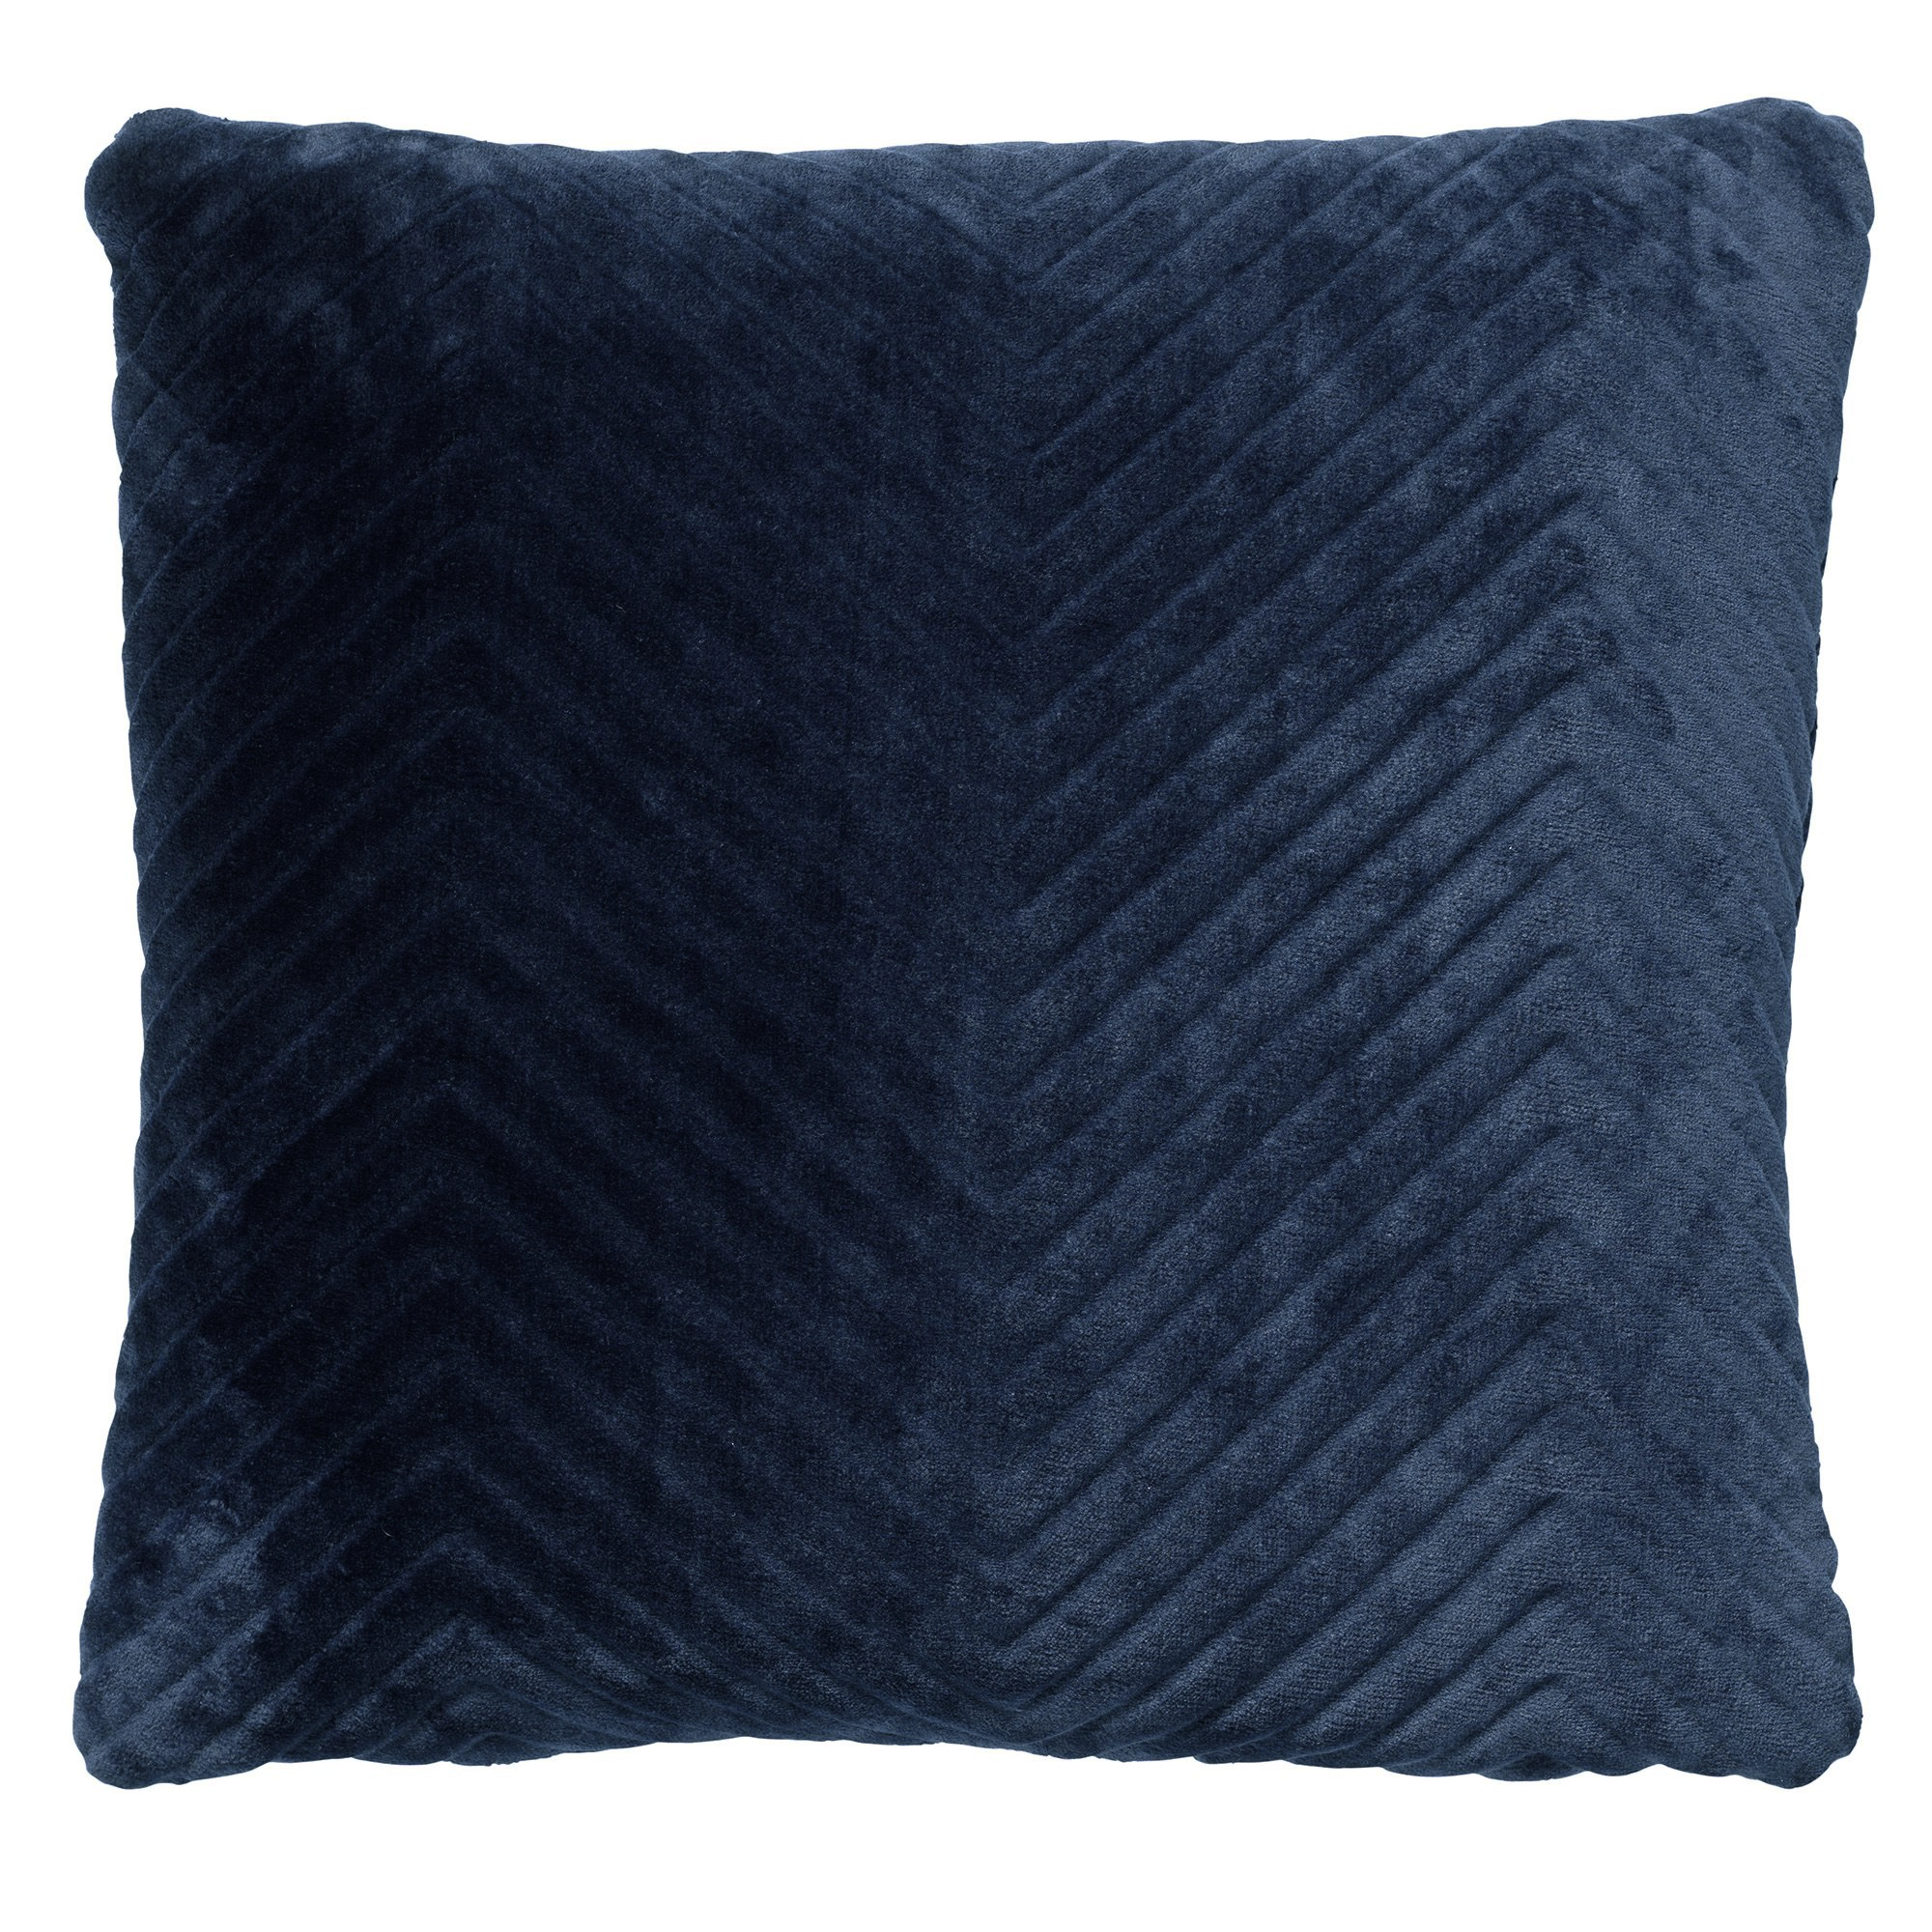 ZICO - Kussenhoes zigzag 45x45 cm Insignia Blue - donkerblauw - superzacht